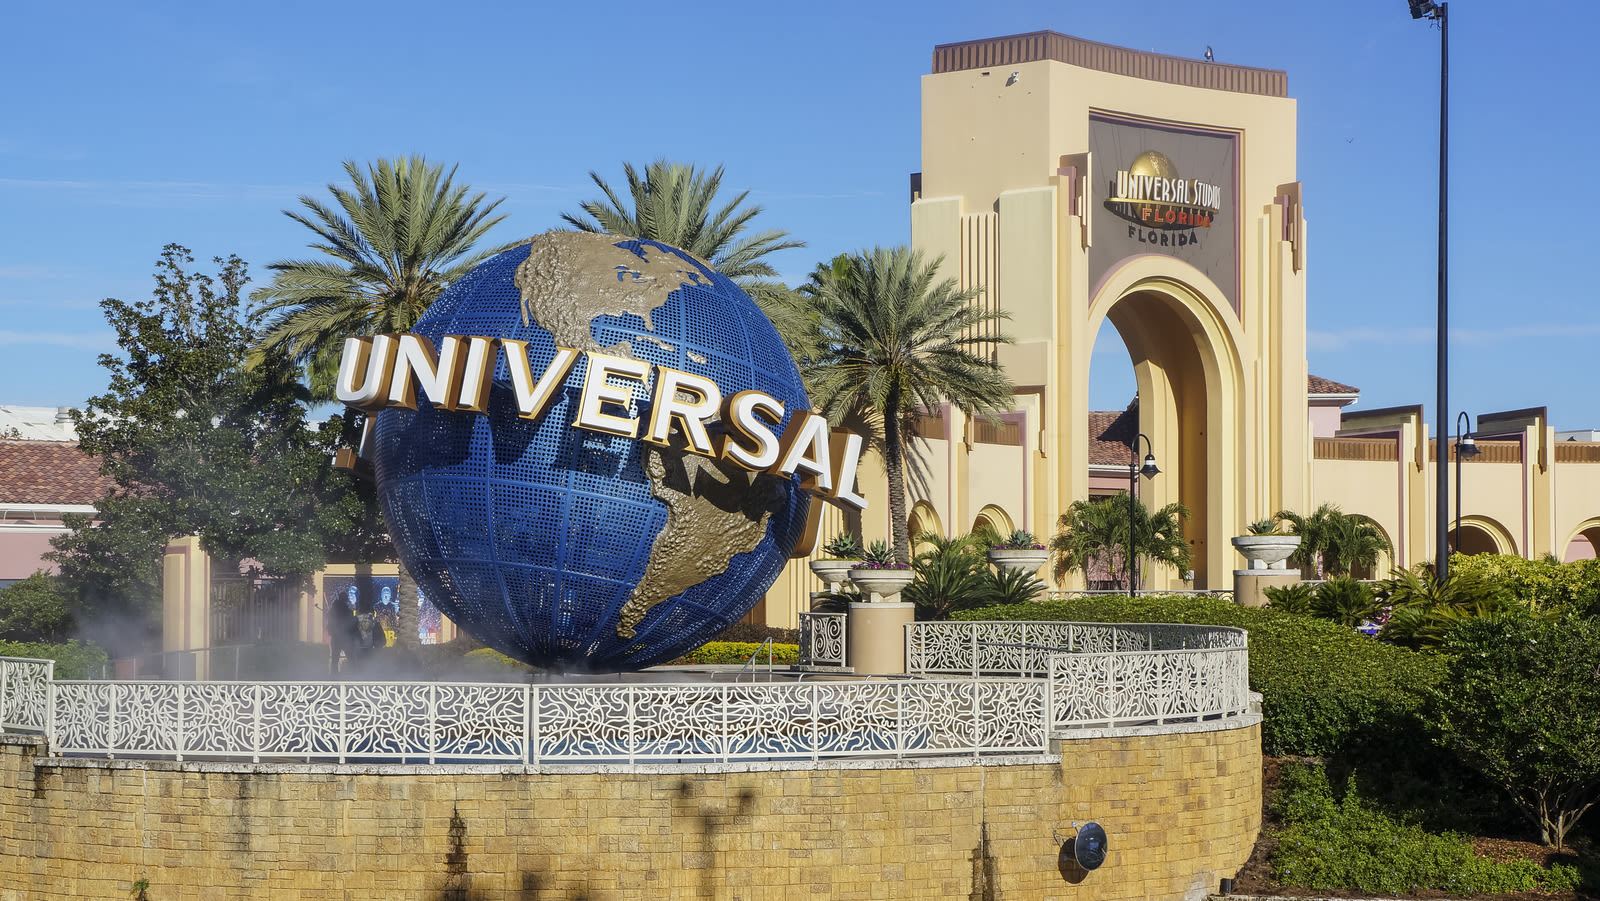 11 Best Snacks At Universal Studios Orlando, According To Customers